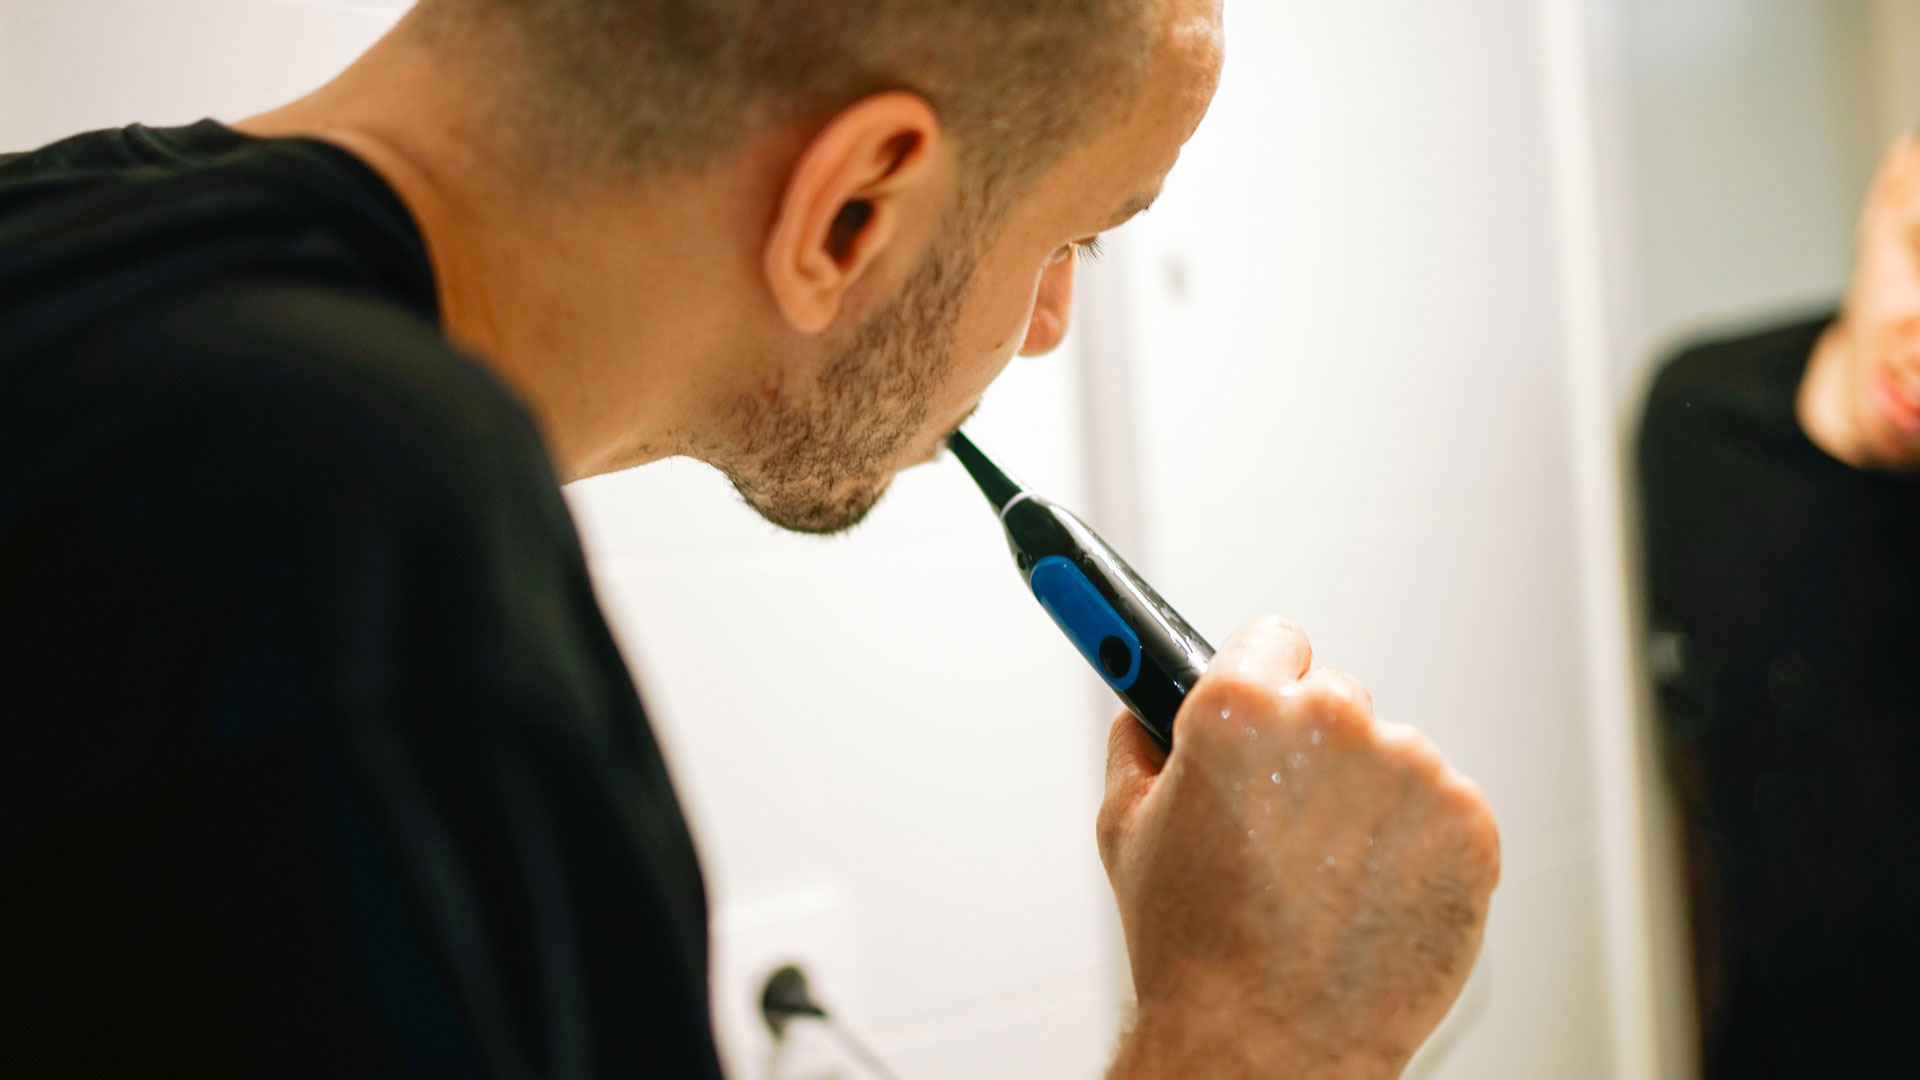 Image shows man brushing his teeth in mirror